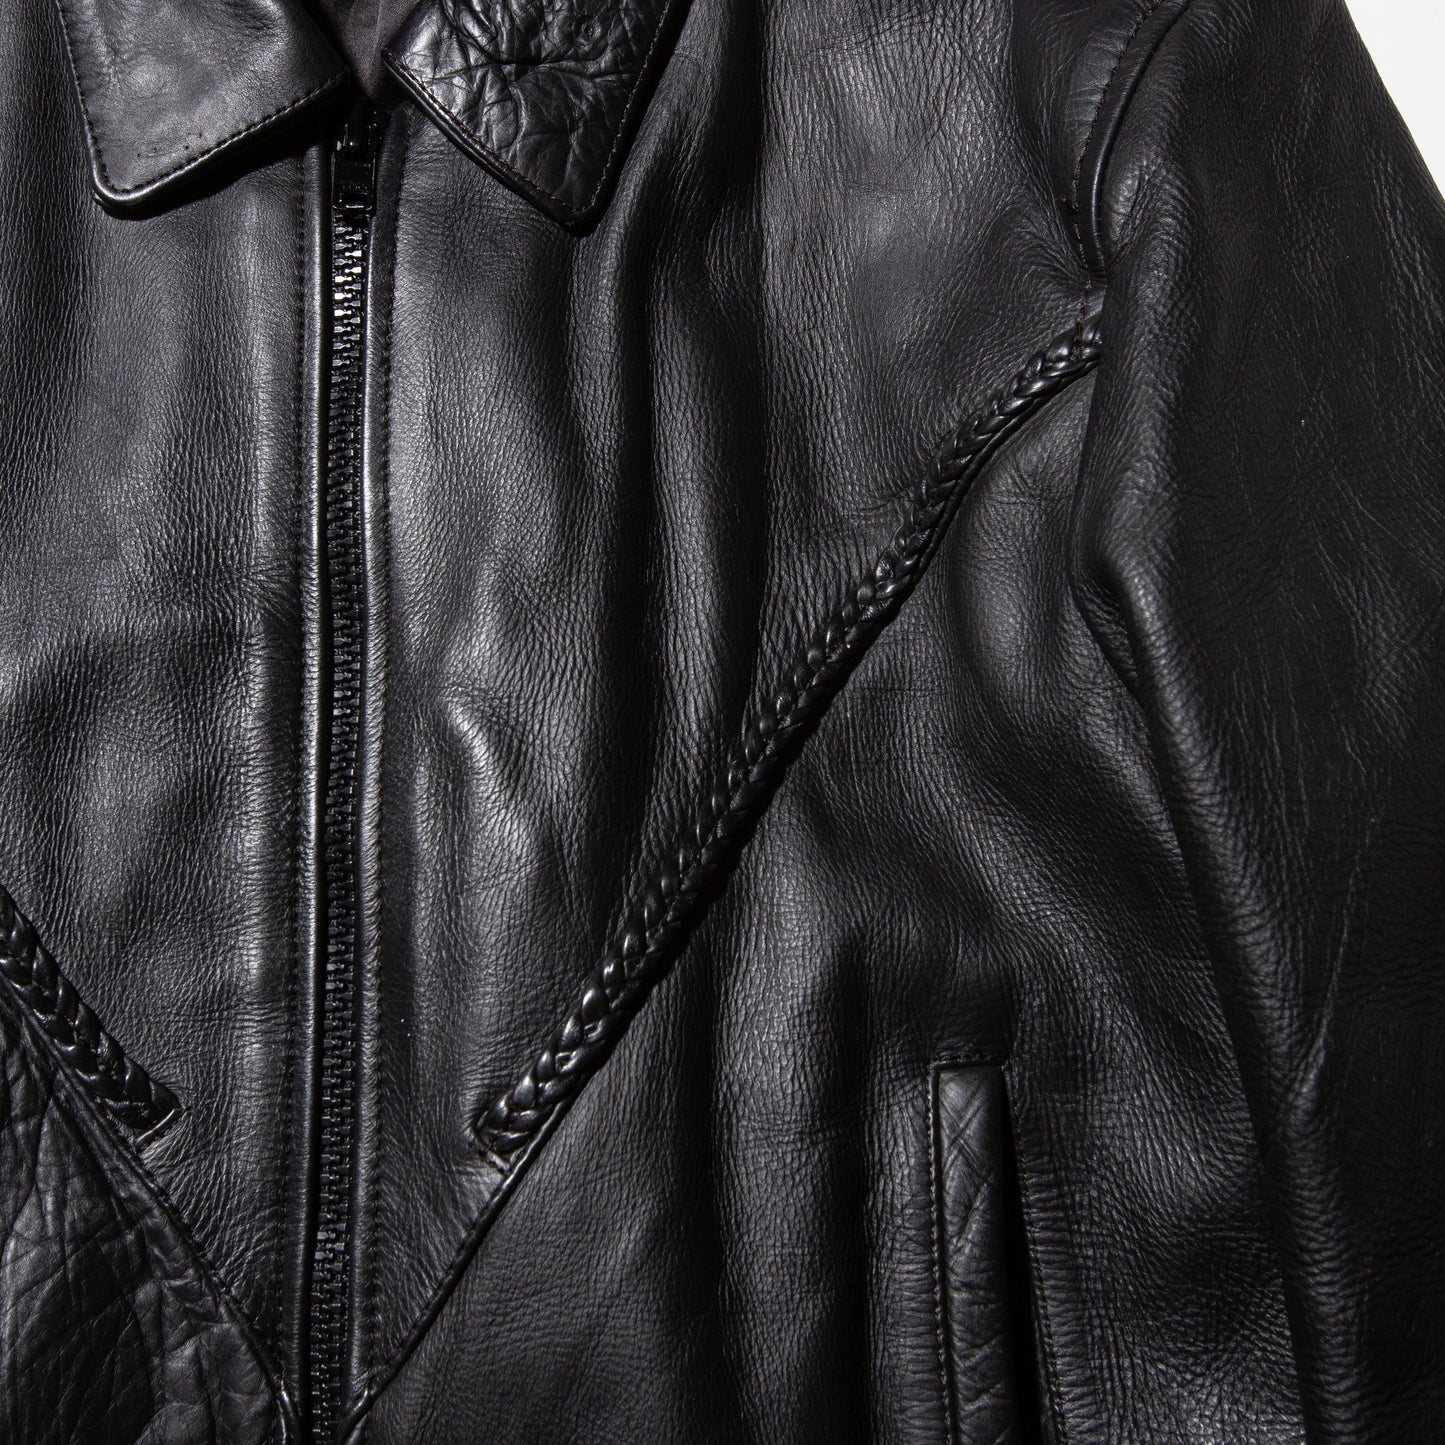 vintage lace up western leather jacket